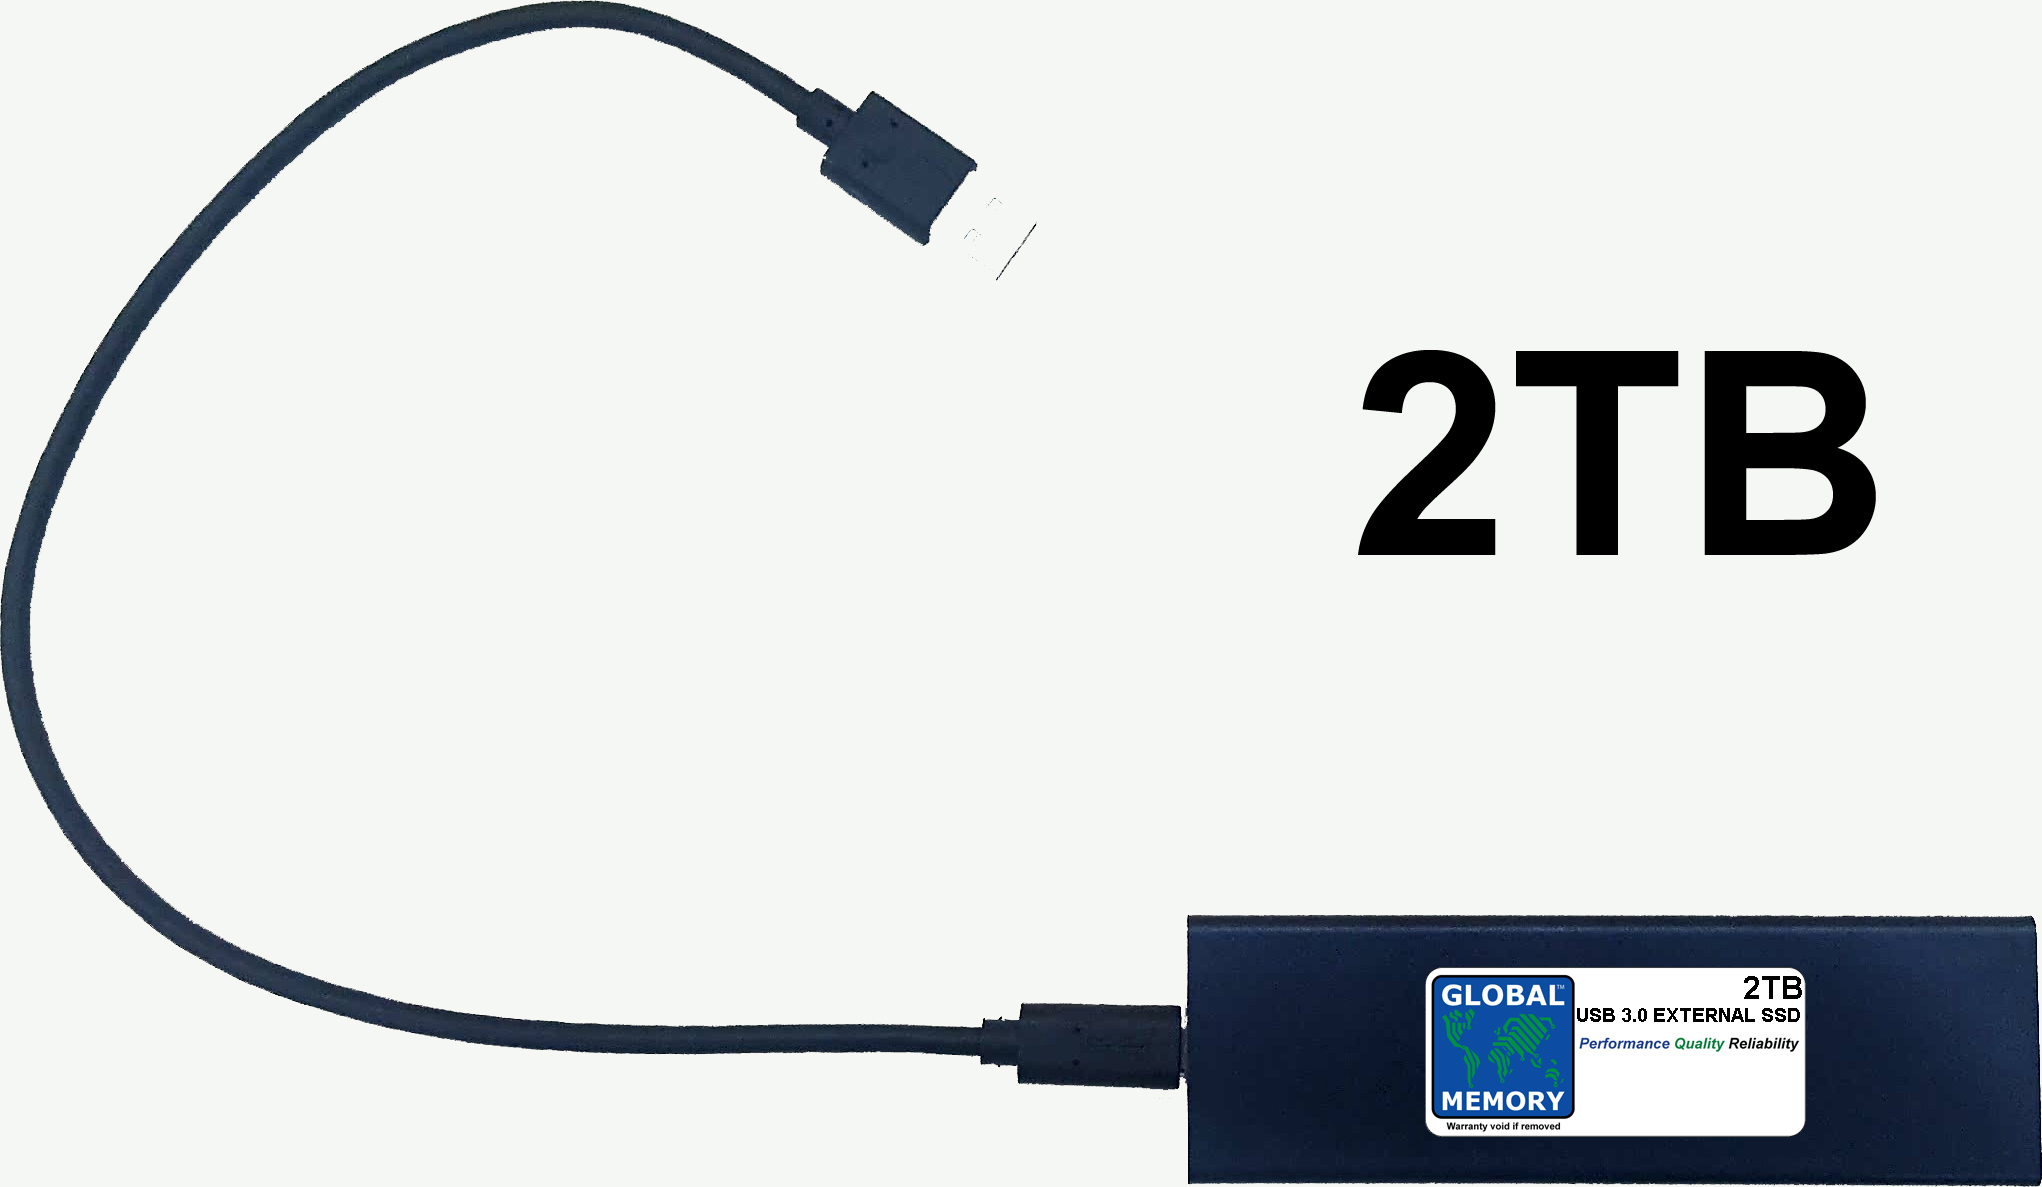 2TB M.2 2280 PCIe Gen3 x4 NVMe SSD EXTERNAL USB 3 FOR LAPTOPS / DESKTOP PCs / SERVERS / WORKSTATIONS - Click Image to Close